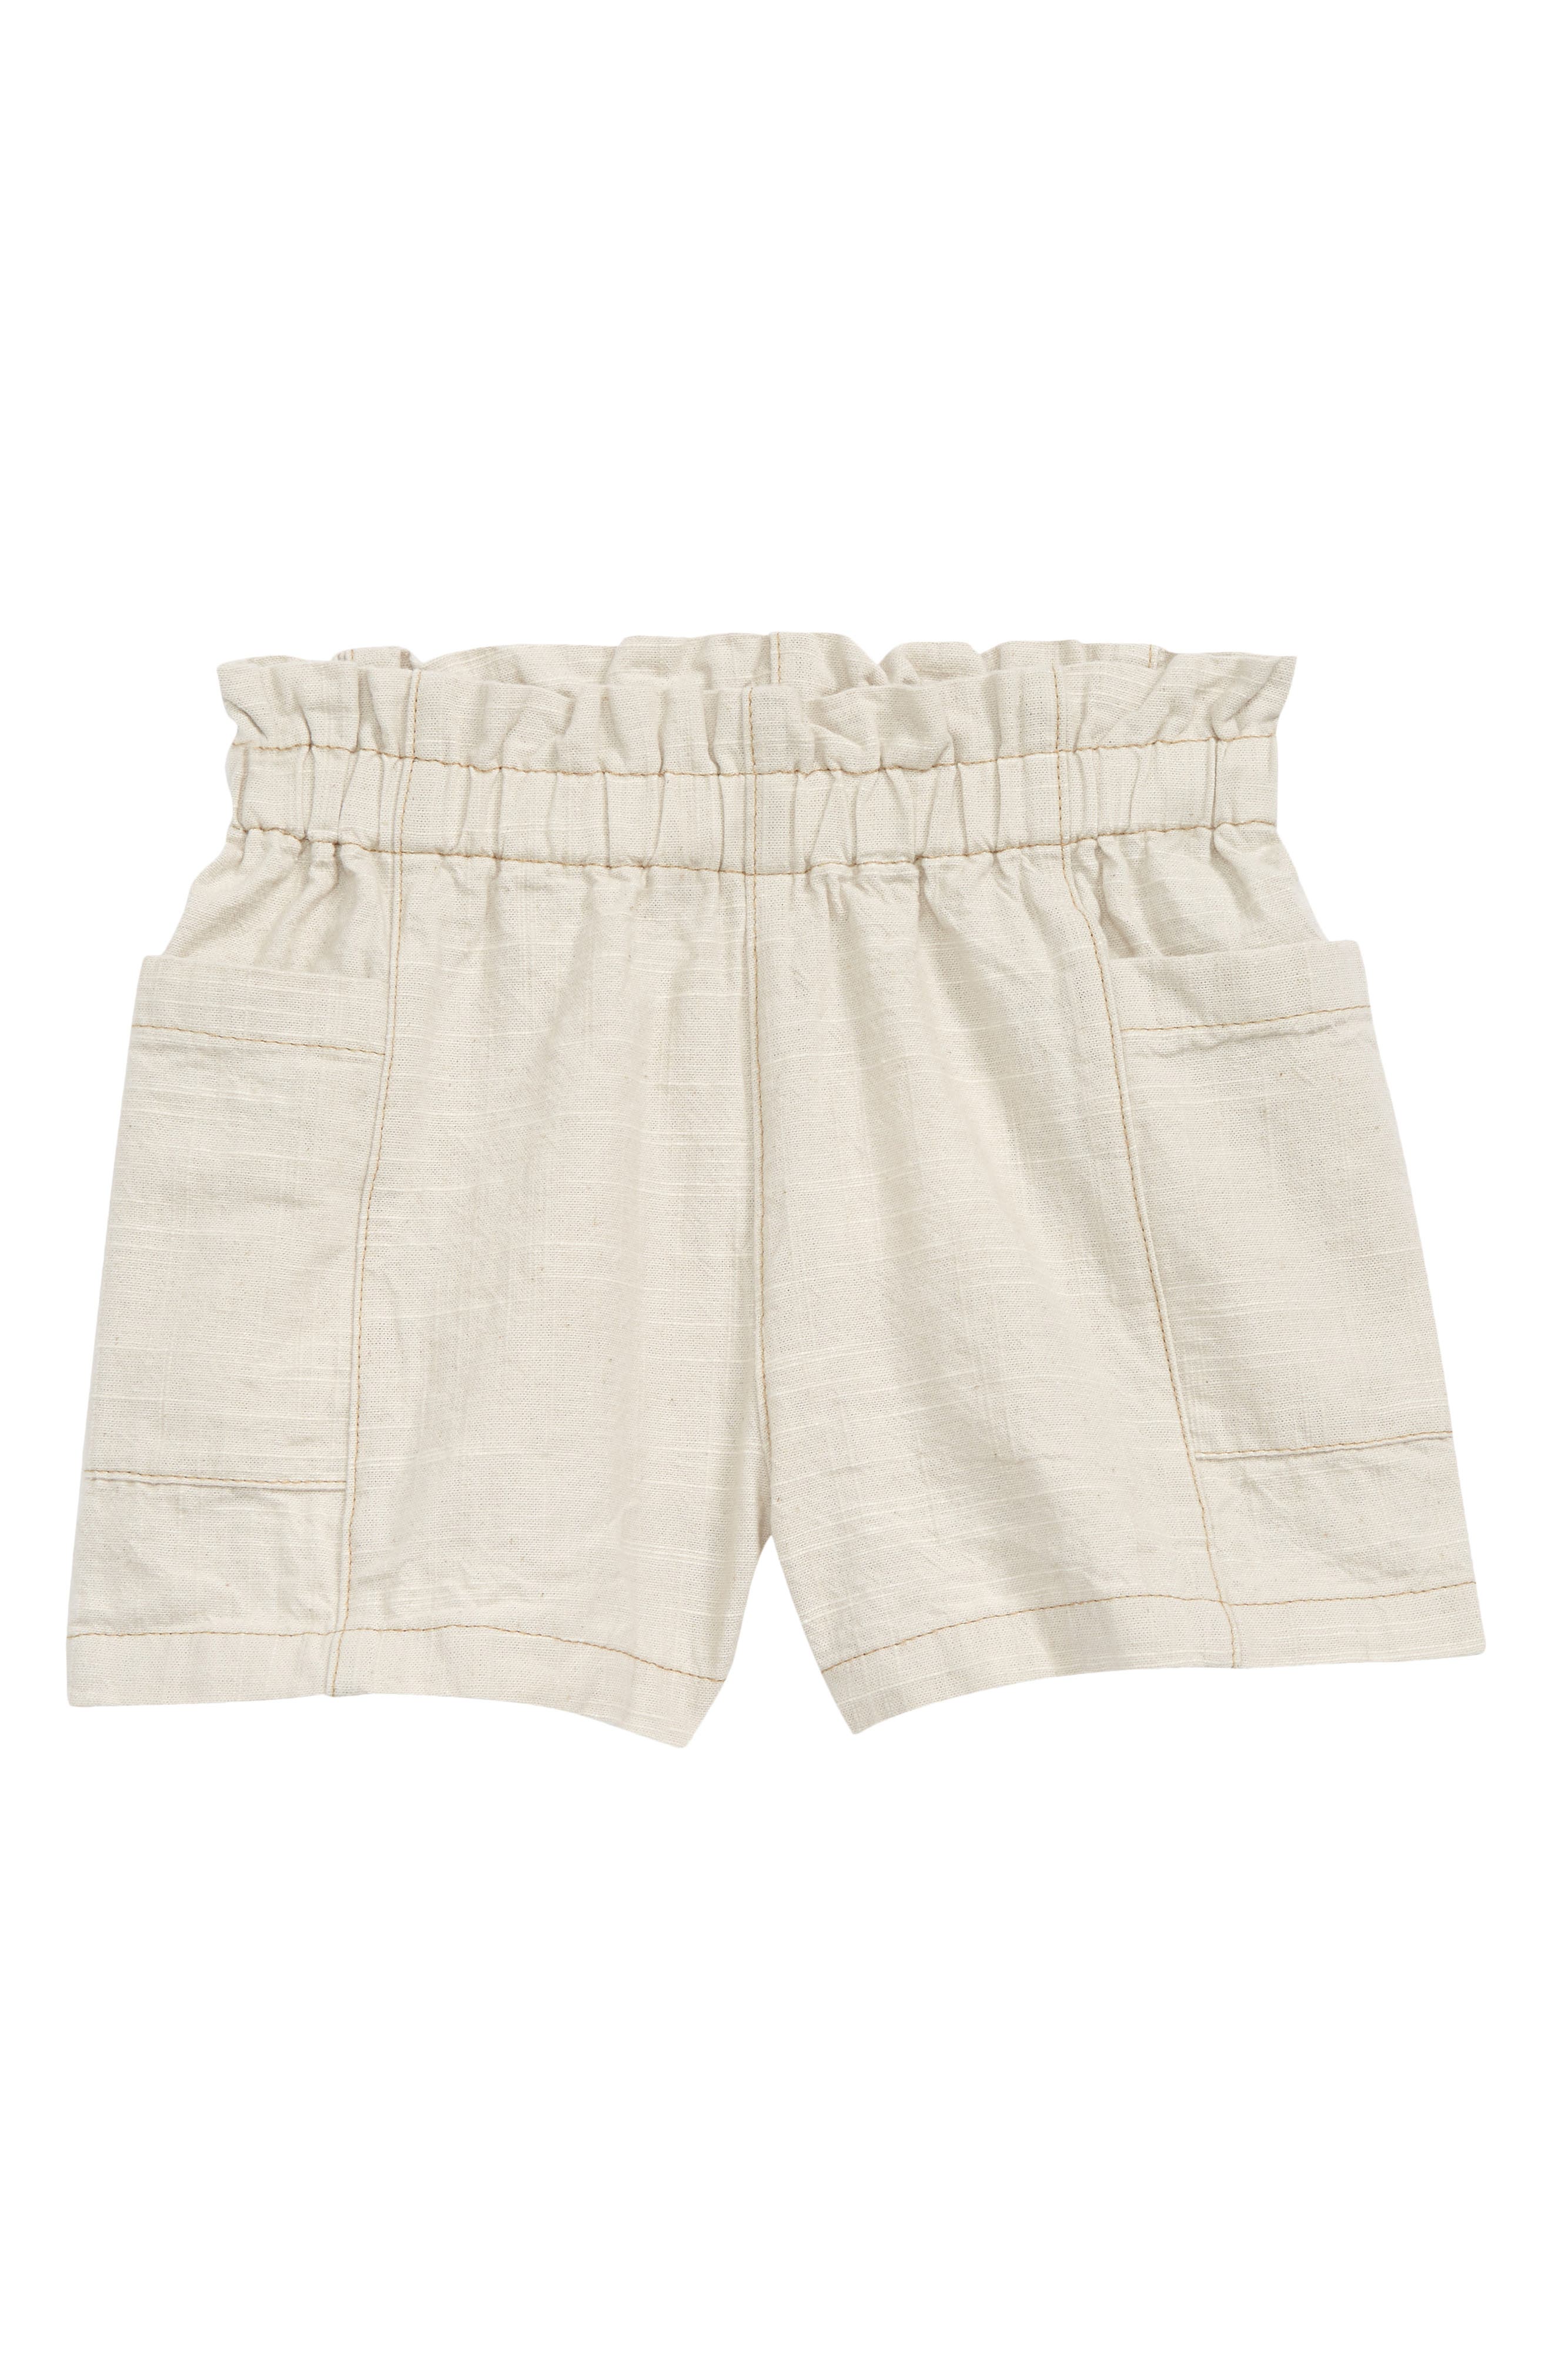 size 4 cotton. Bonpoint bonpoint shorts boys 